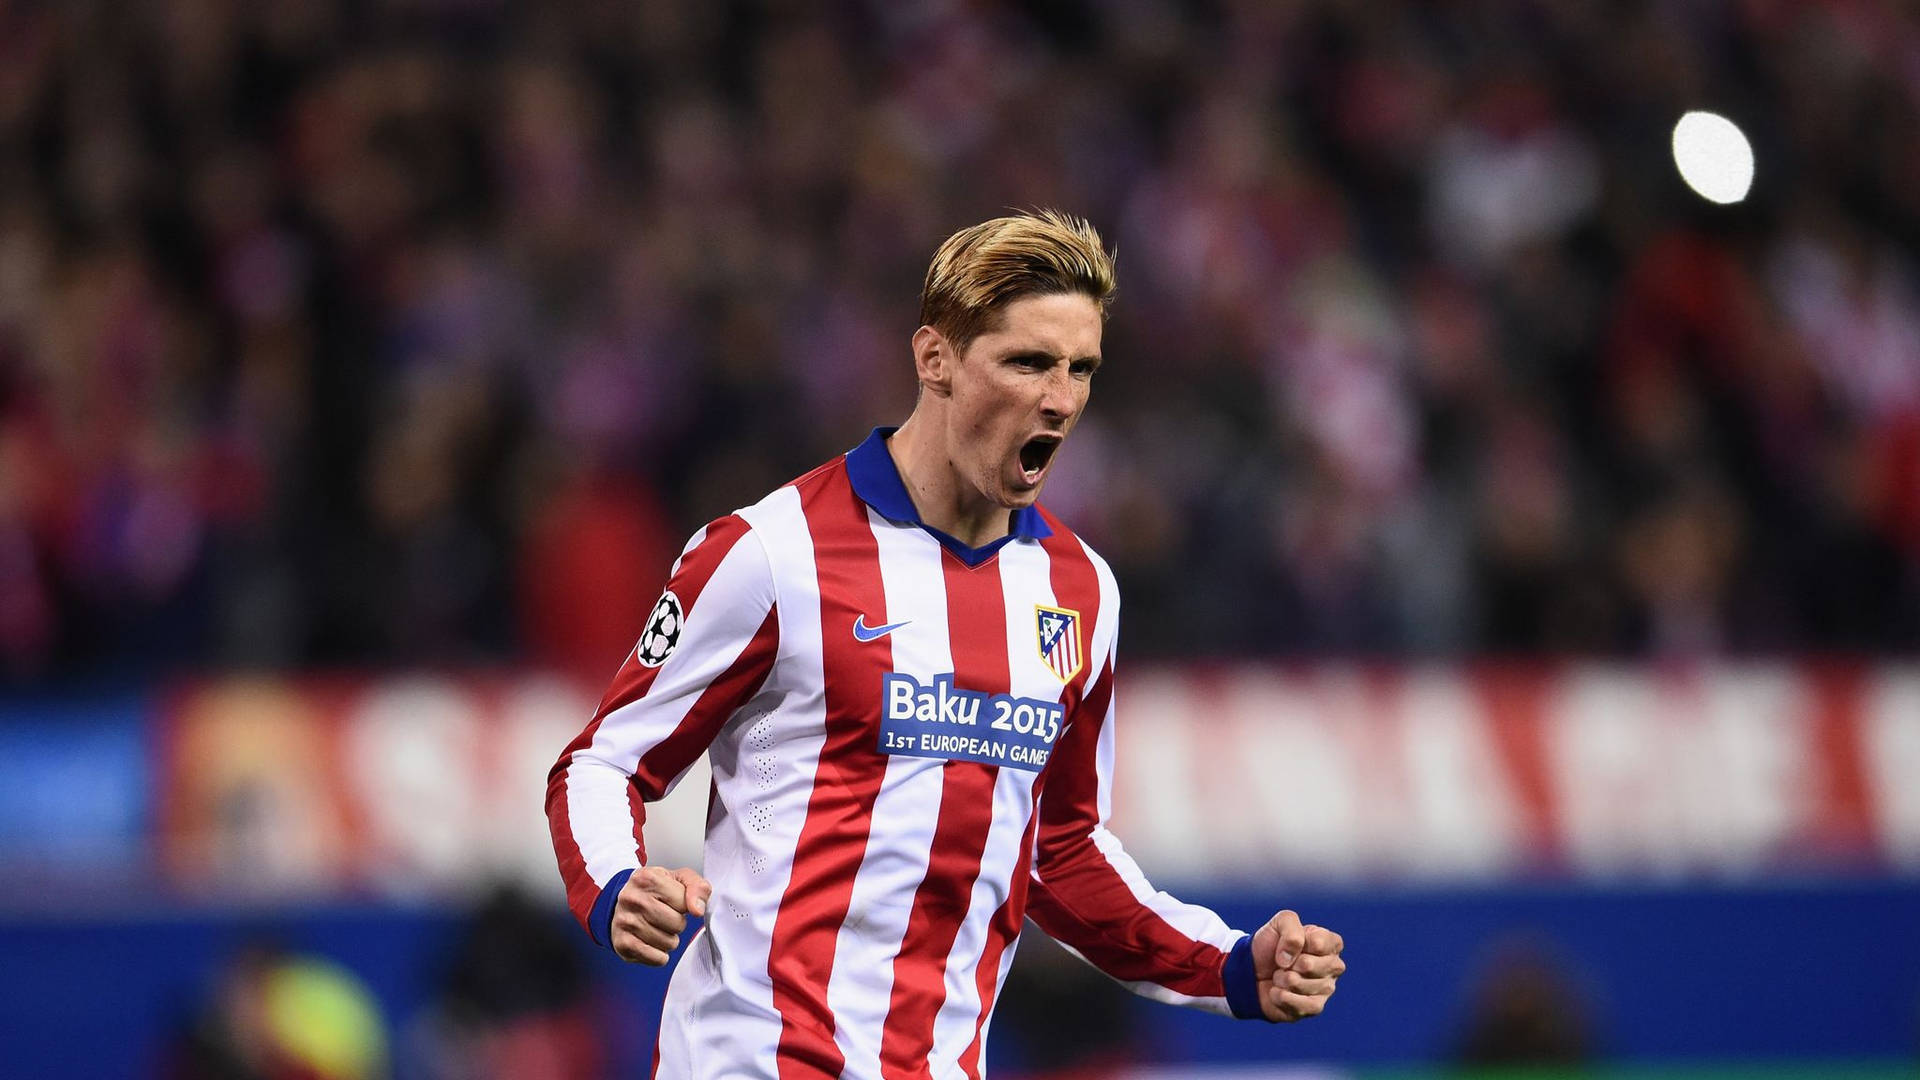 Fernando Torres In Baku 2015 Game